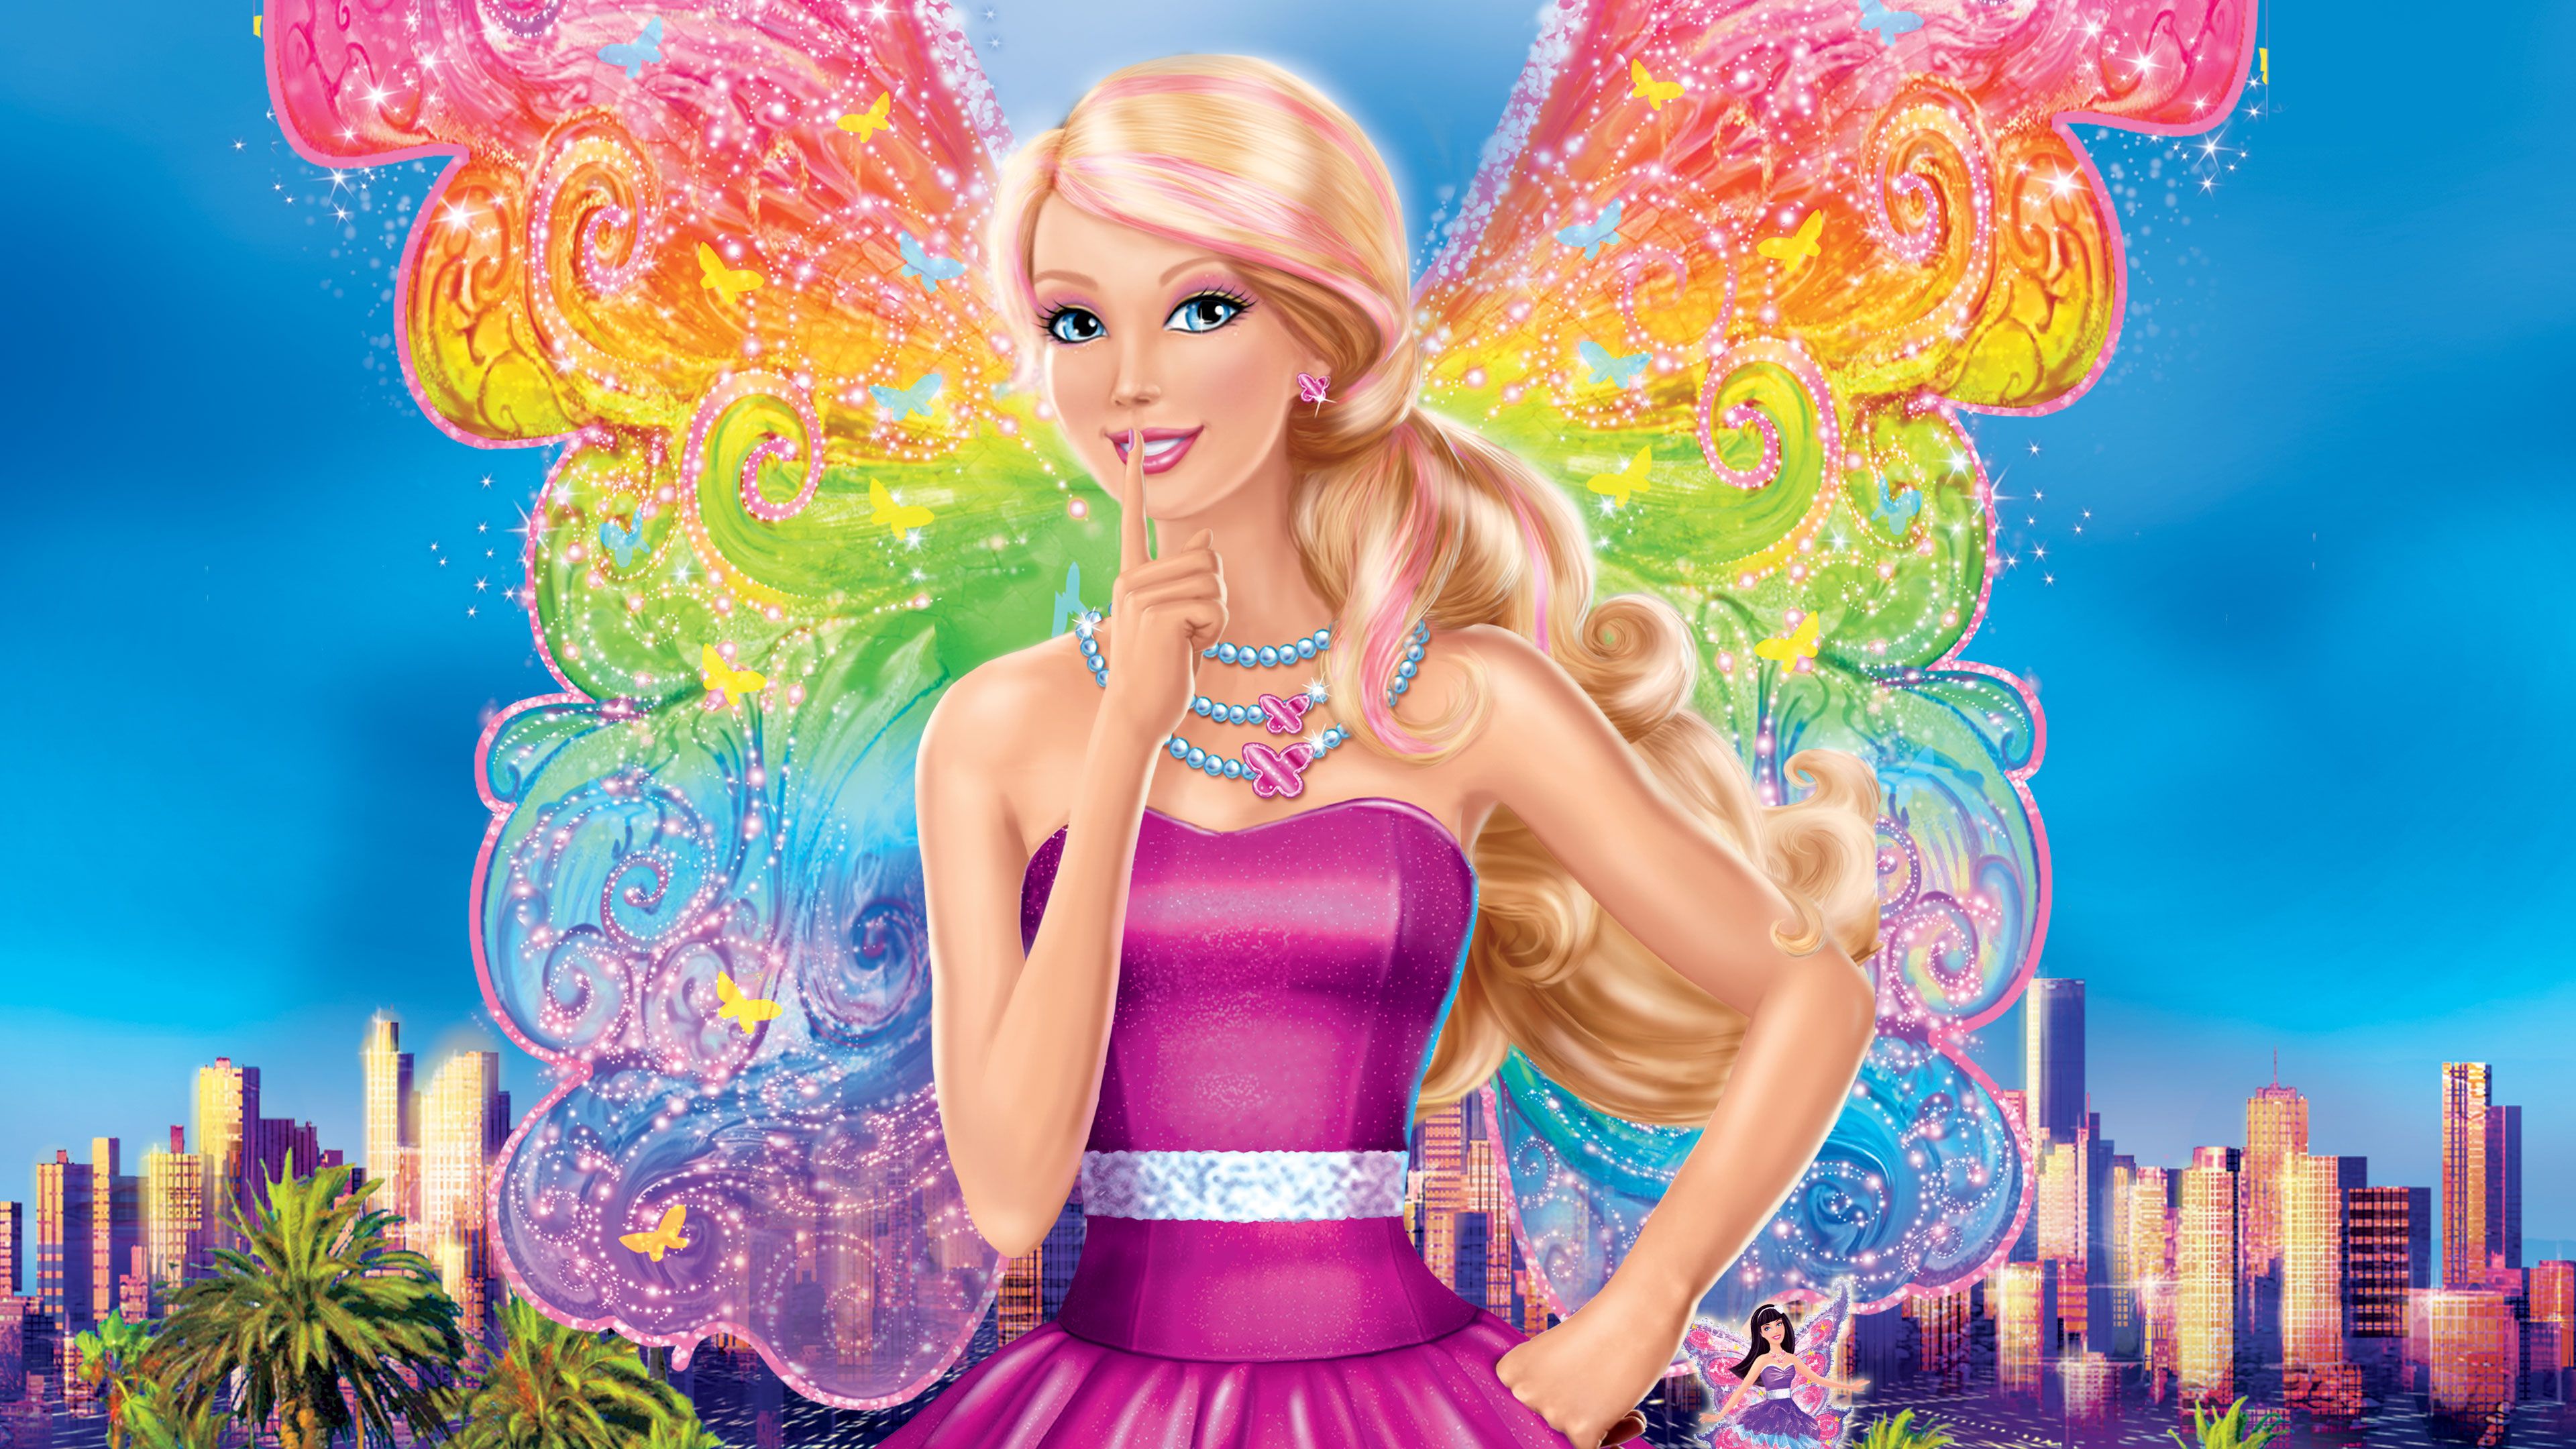 Barbie Movies, Barbie Mariposa And The Fairy Princess, Barbie As The ...